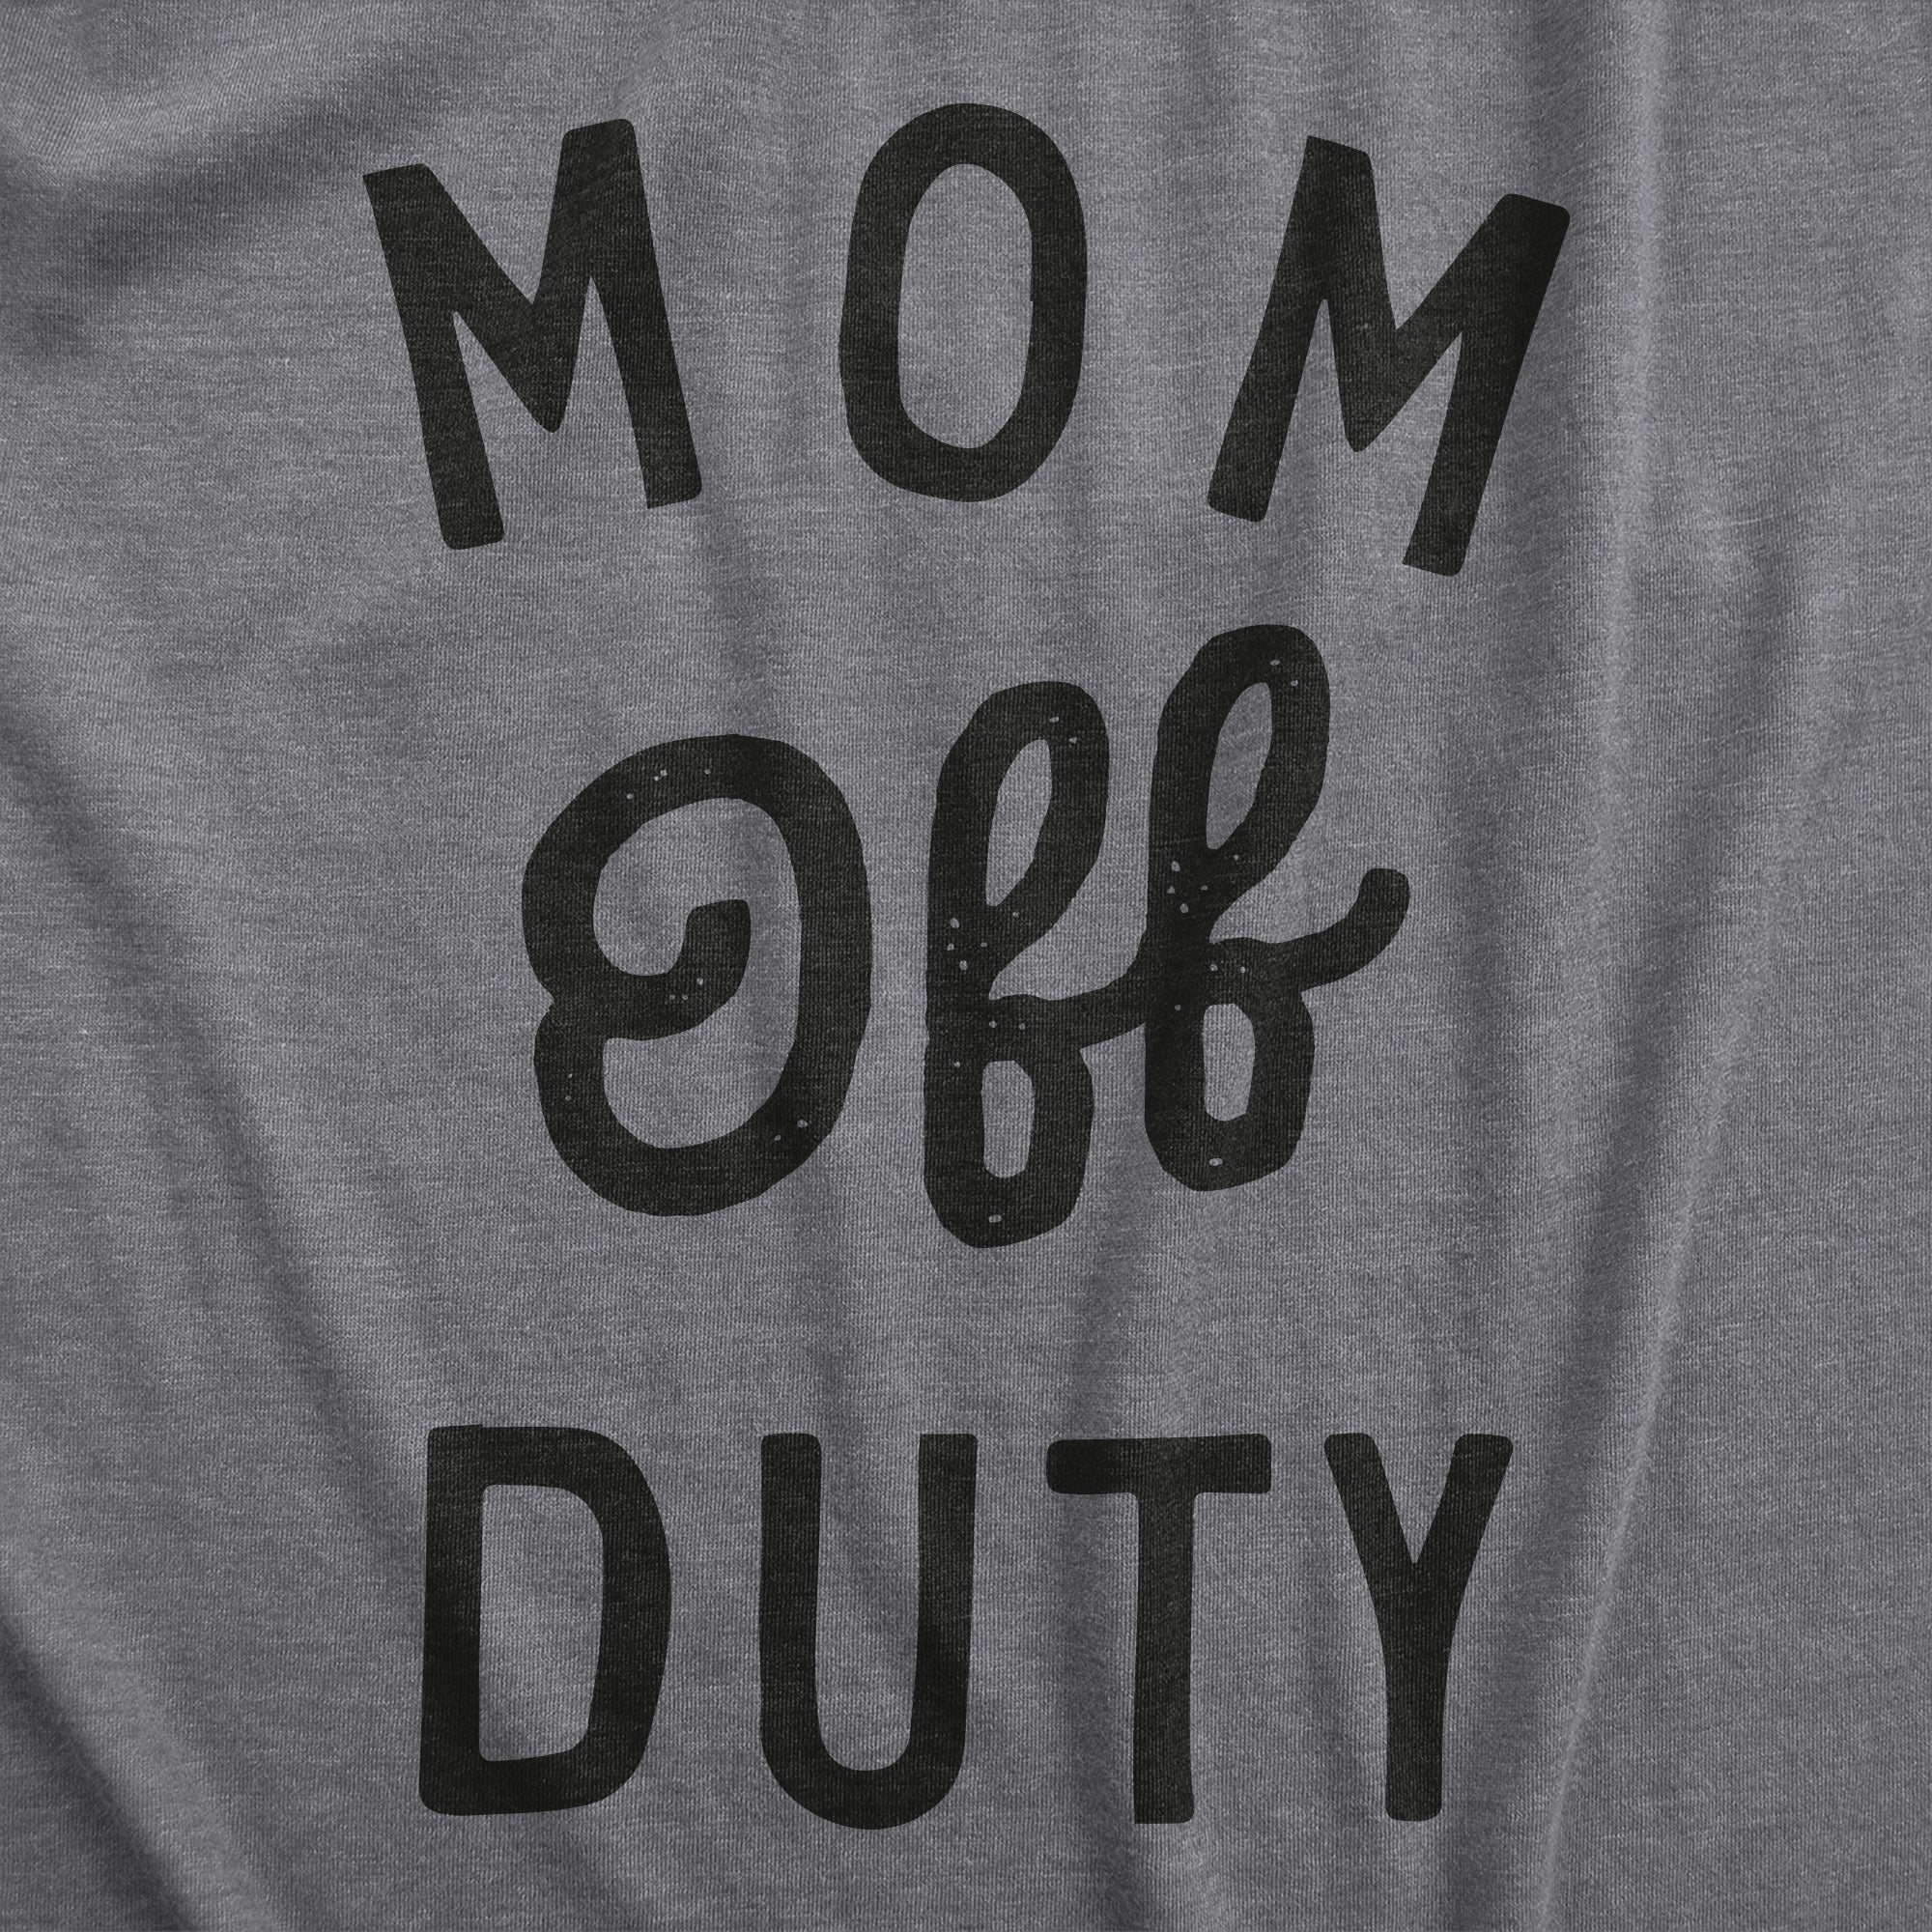 Funny Dark Heather Grey - Off Duty Mom Off Duty Womens T Shirt Nerdy Mother's Day Sarcastic Tee